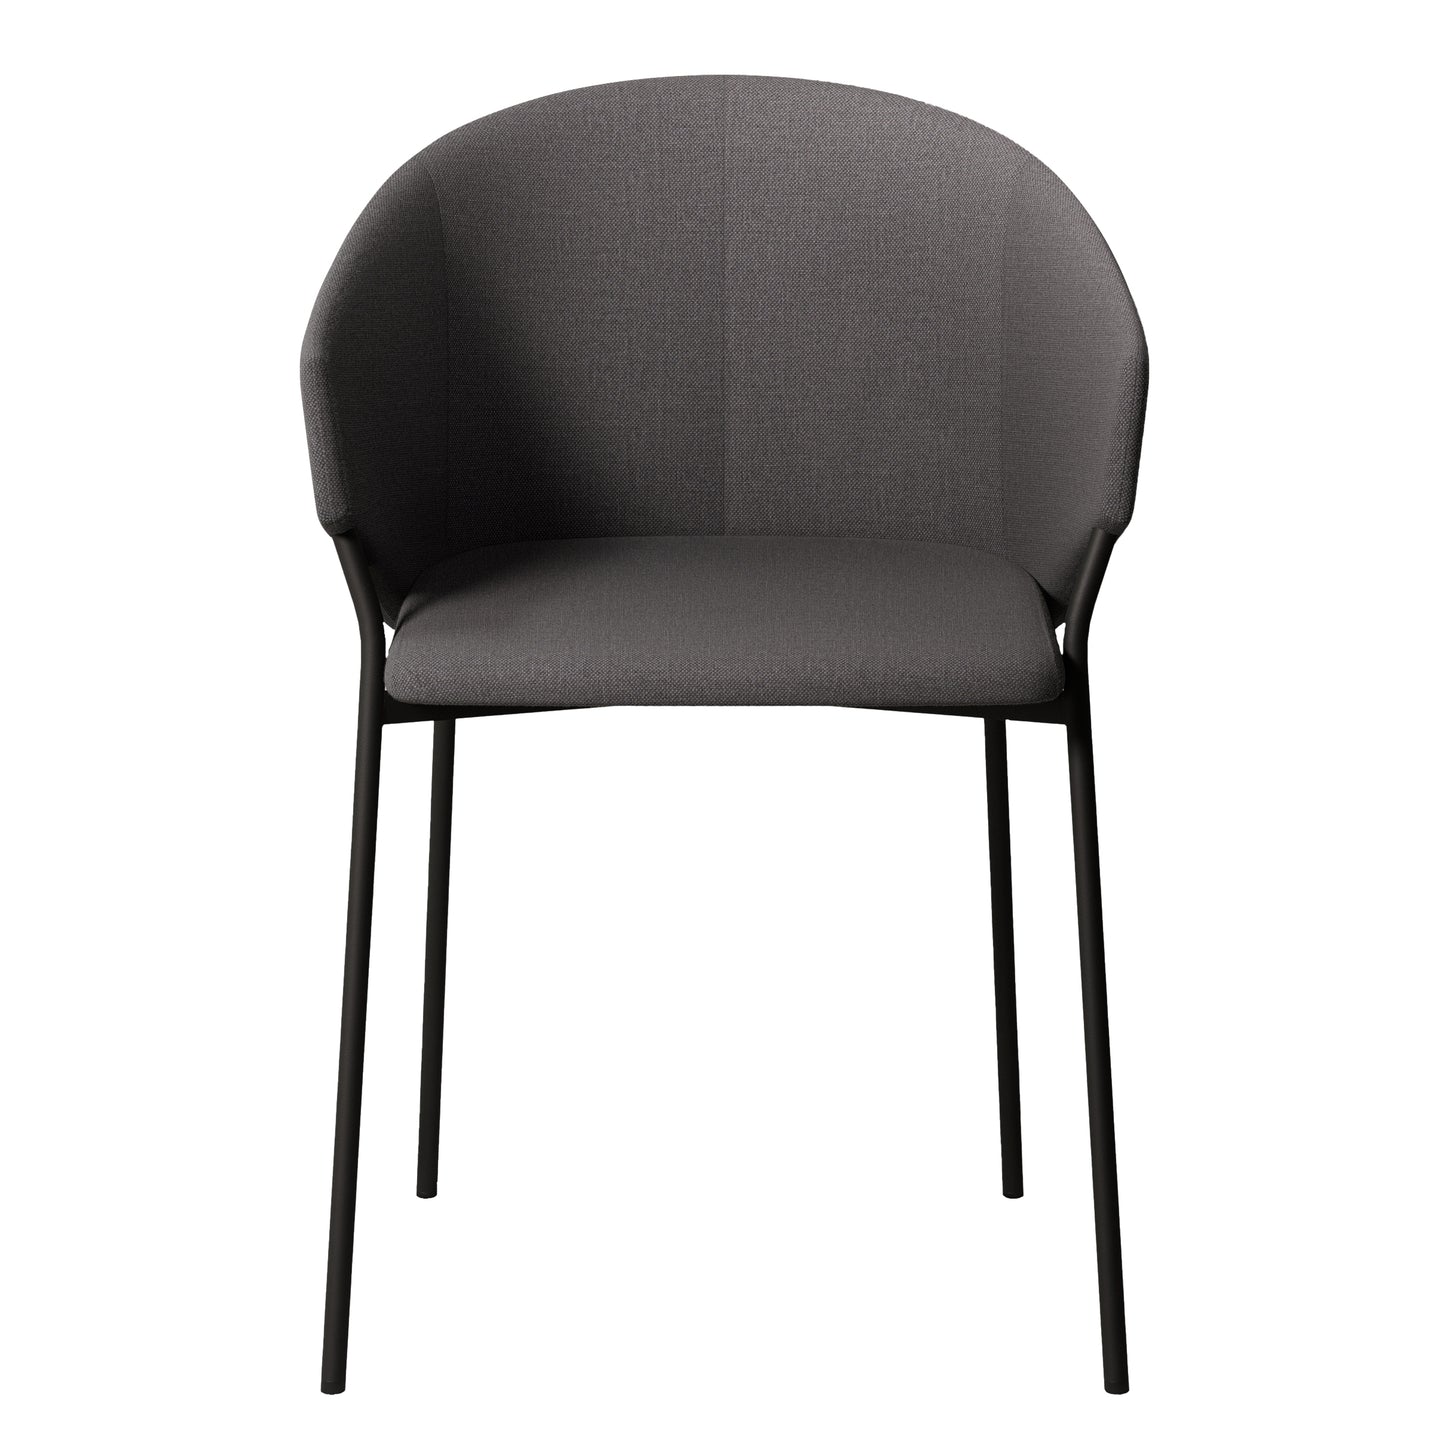 Chair Throne - 91 - Dark Grey